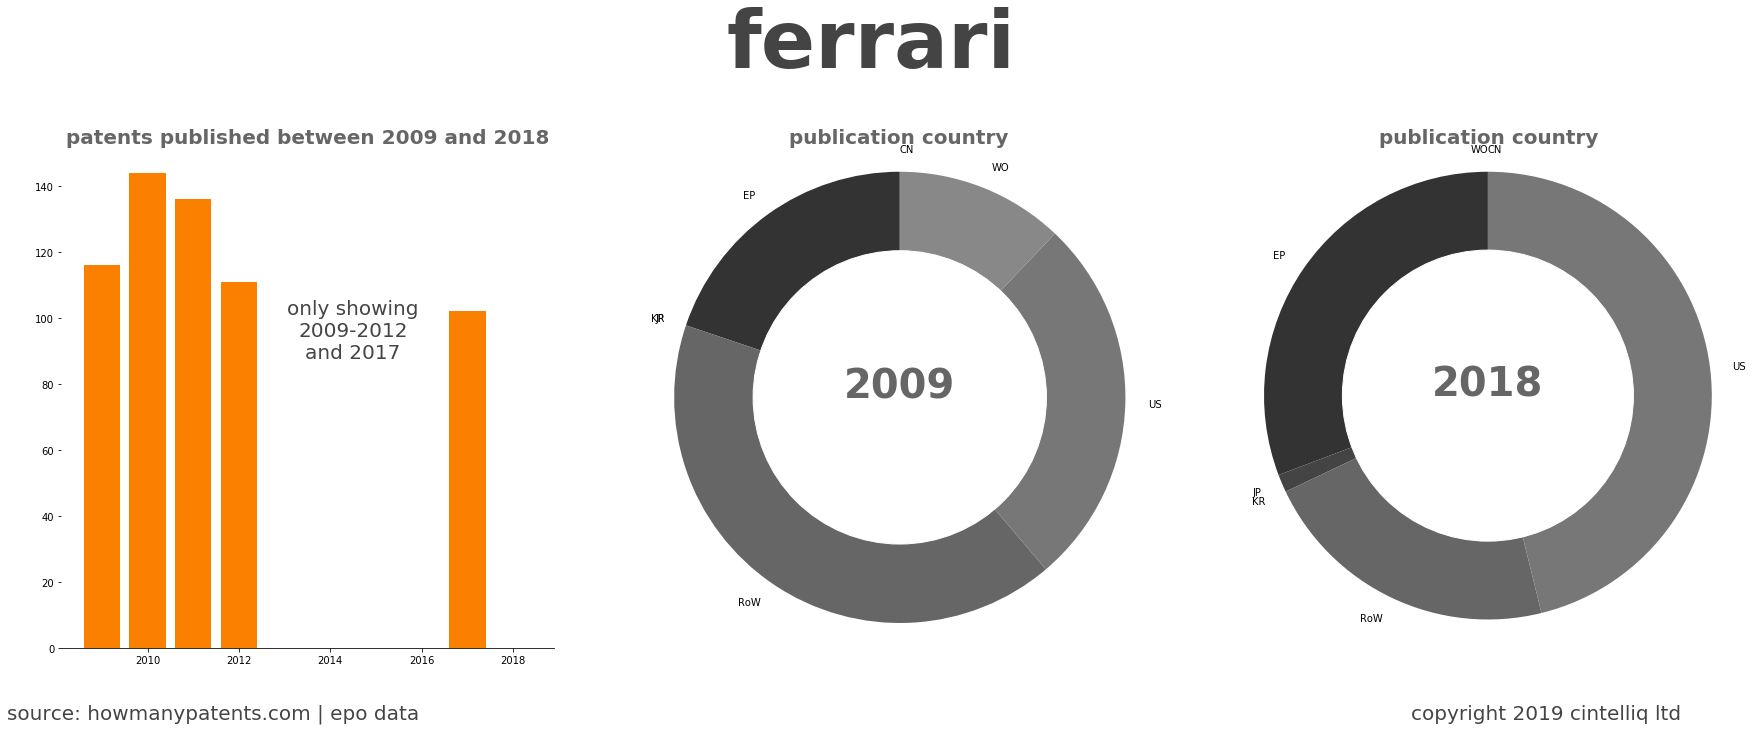 summary of patents for Ferrari